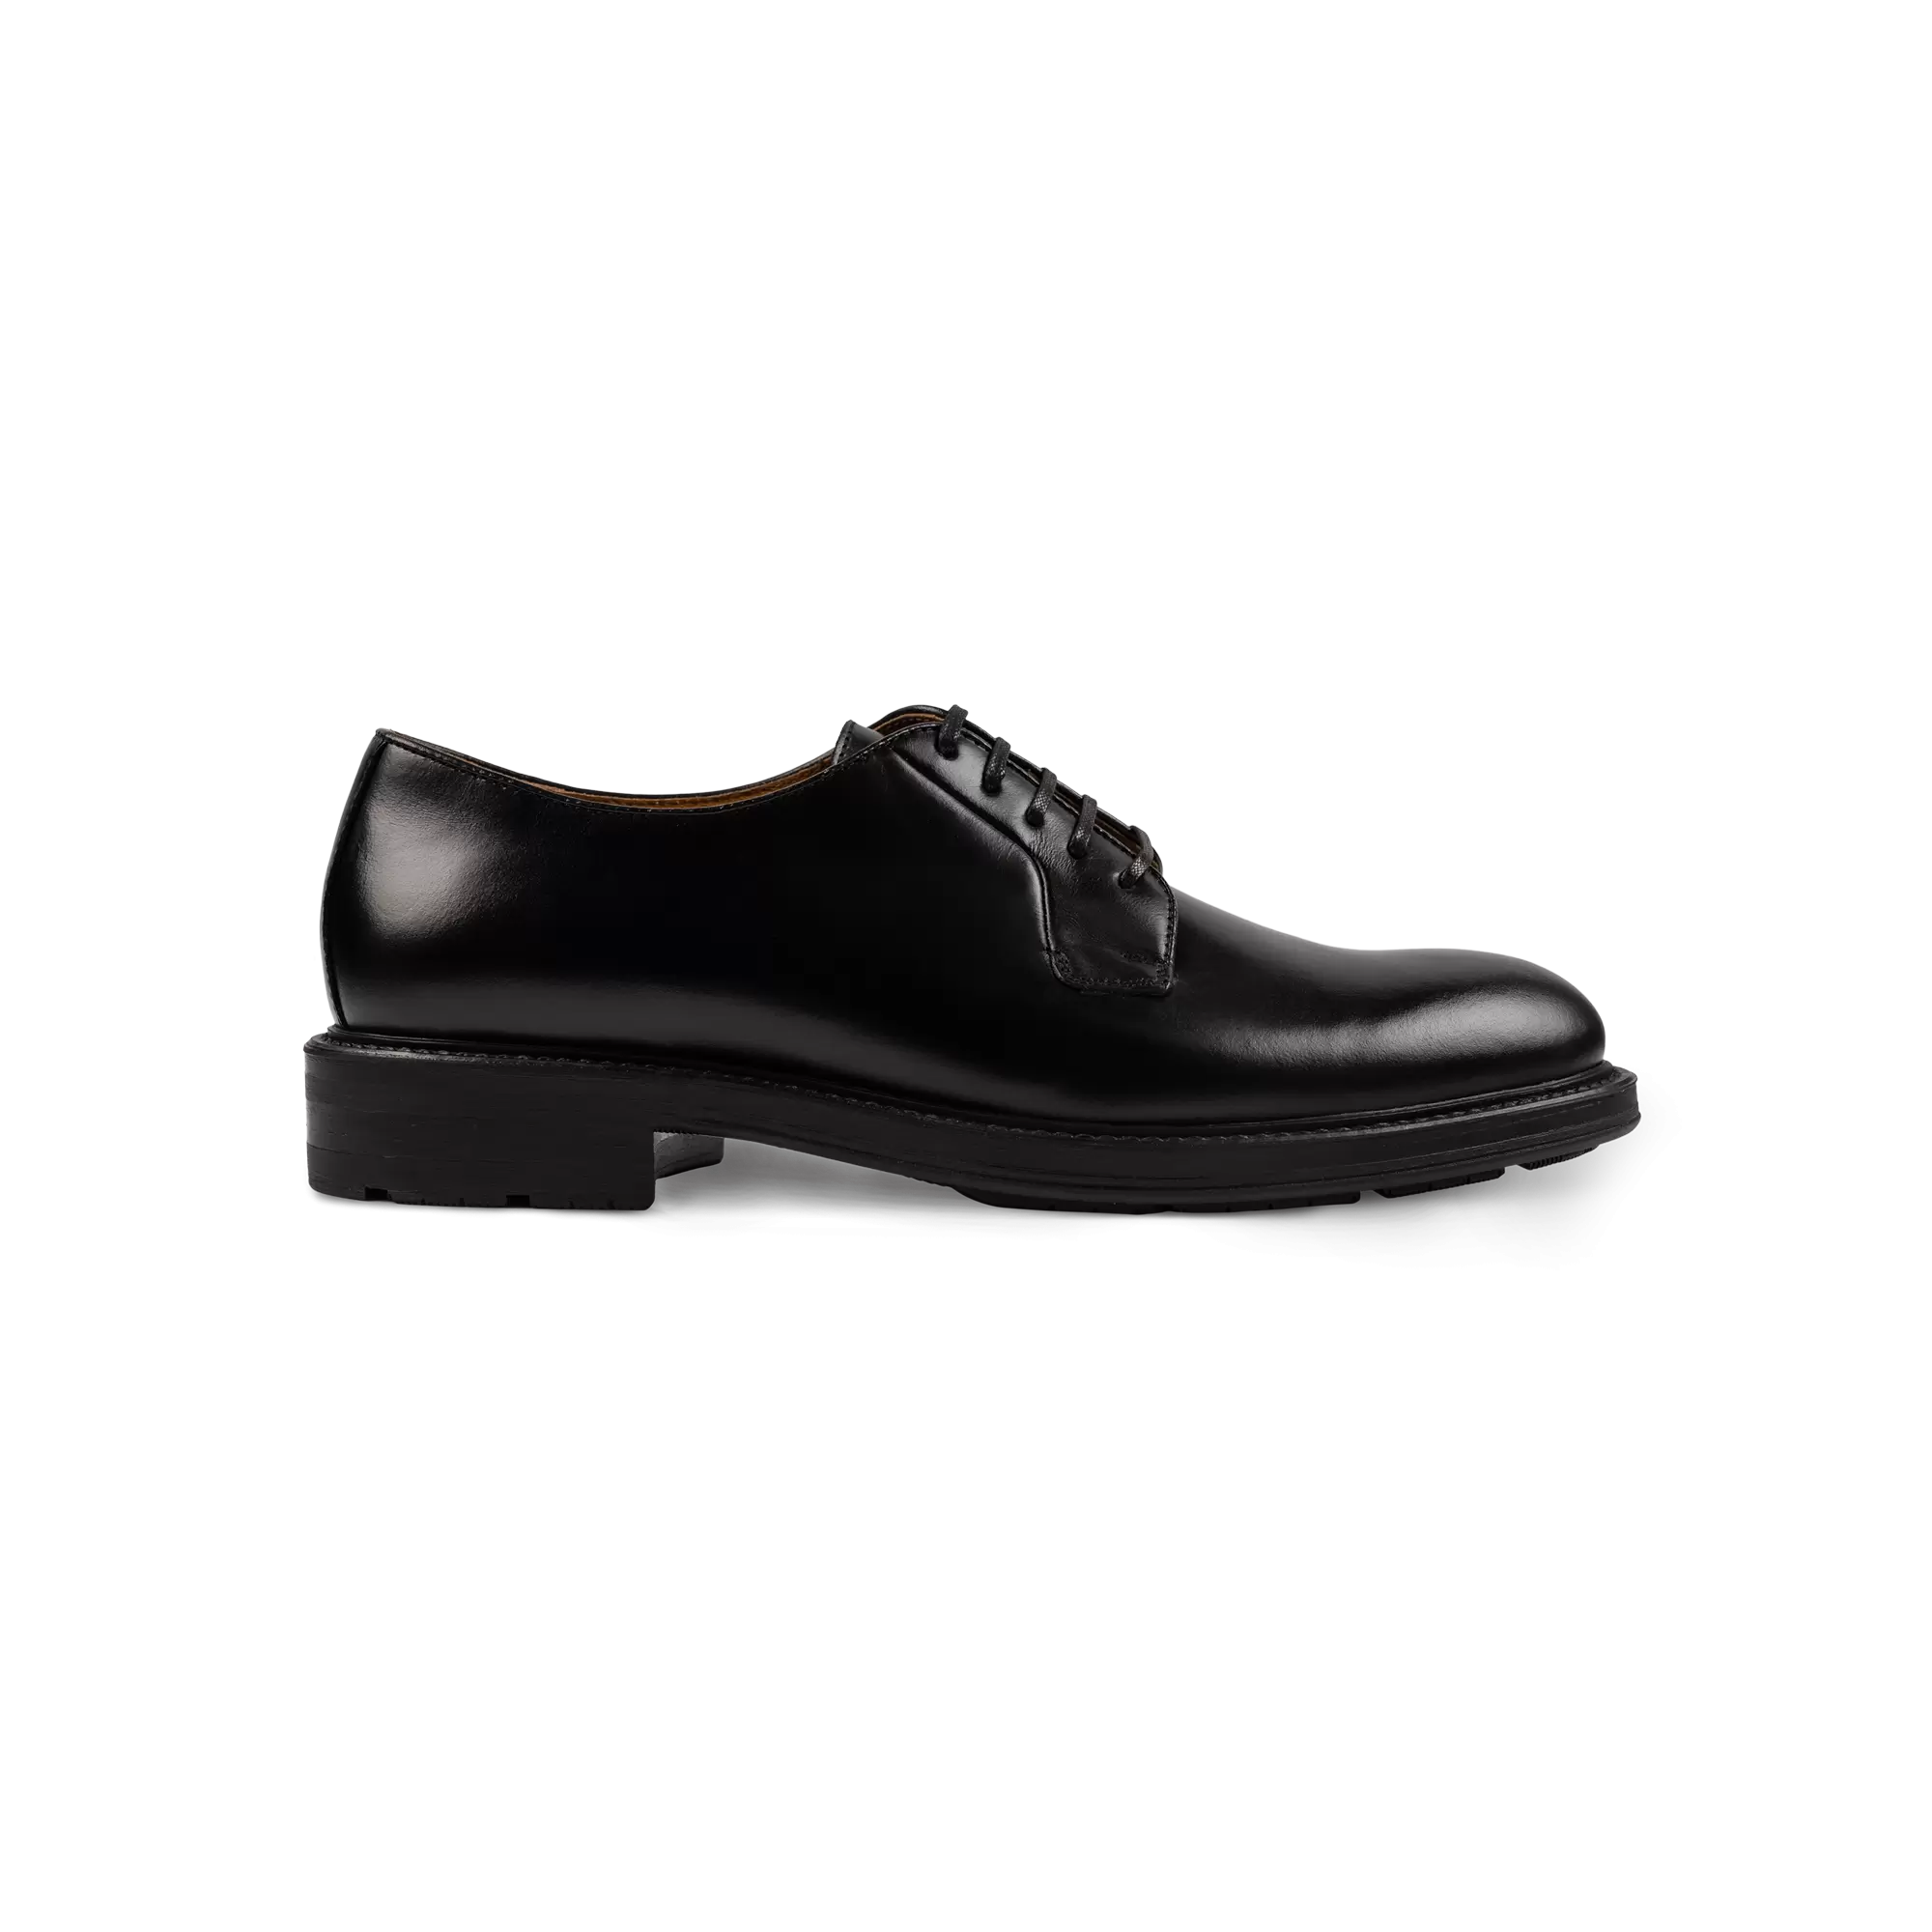 Men's Black Derby Shoes - Genuine Calf Leather